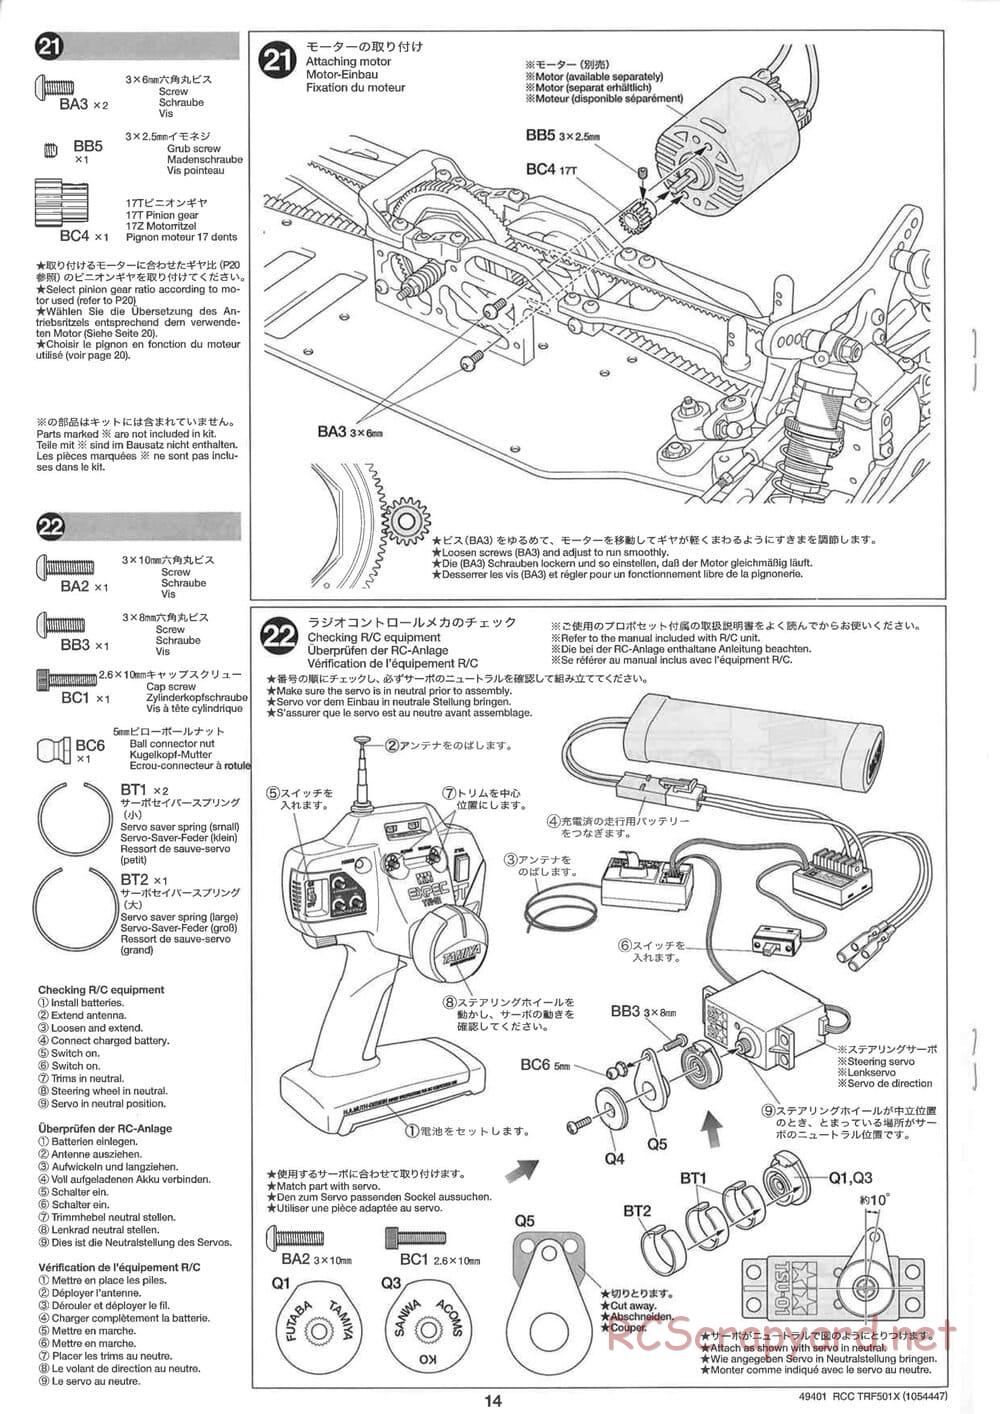 Tamiya - TRF501X Chassis - Manual - Page 14